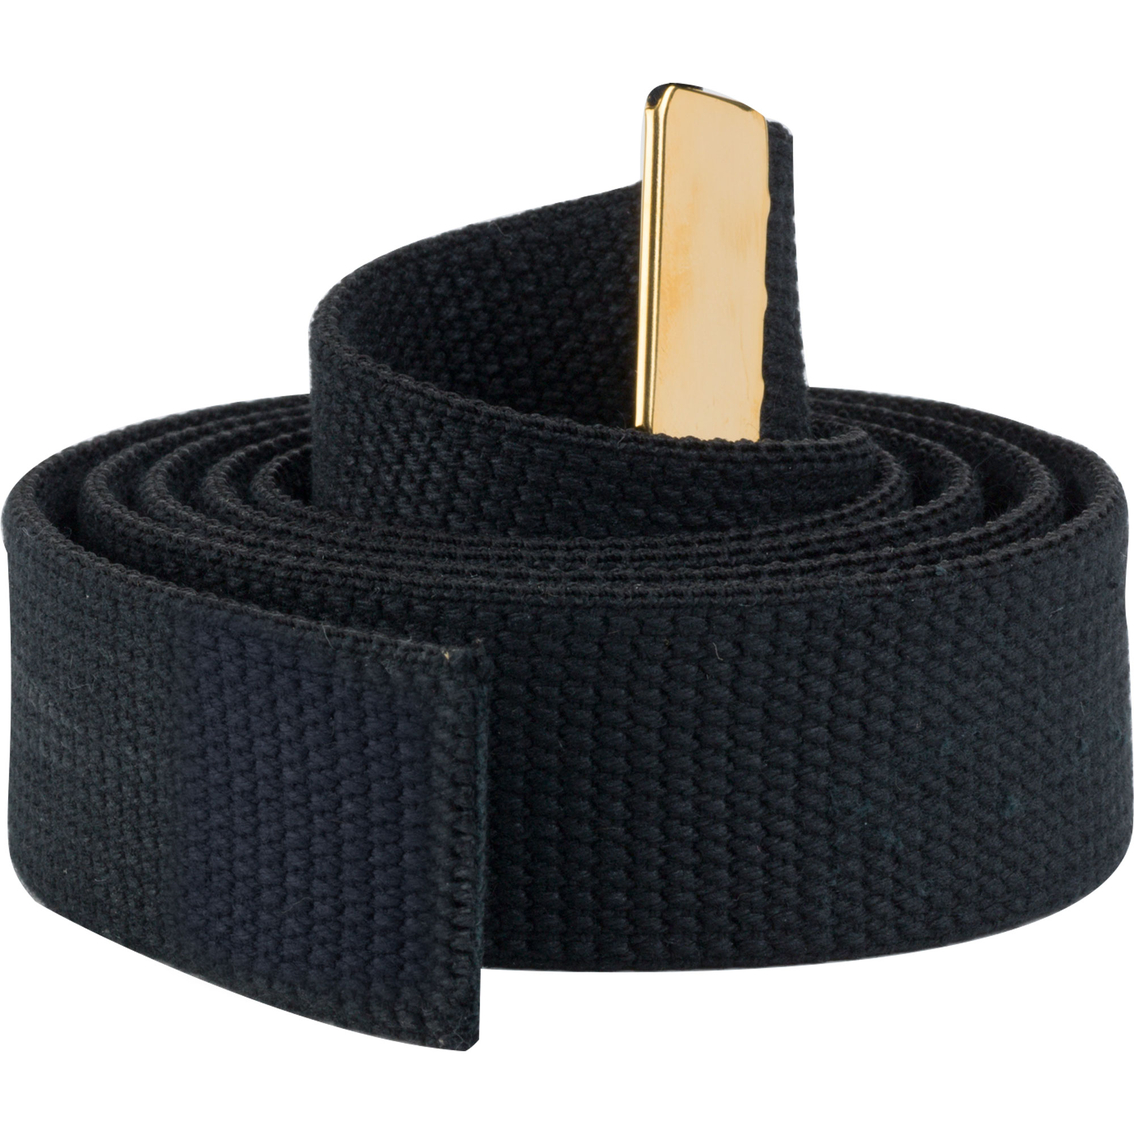 DLATS Cotton Web Belt with Brass Tip